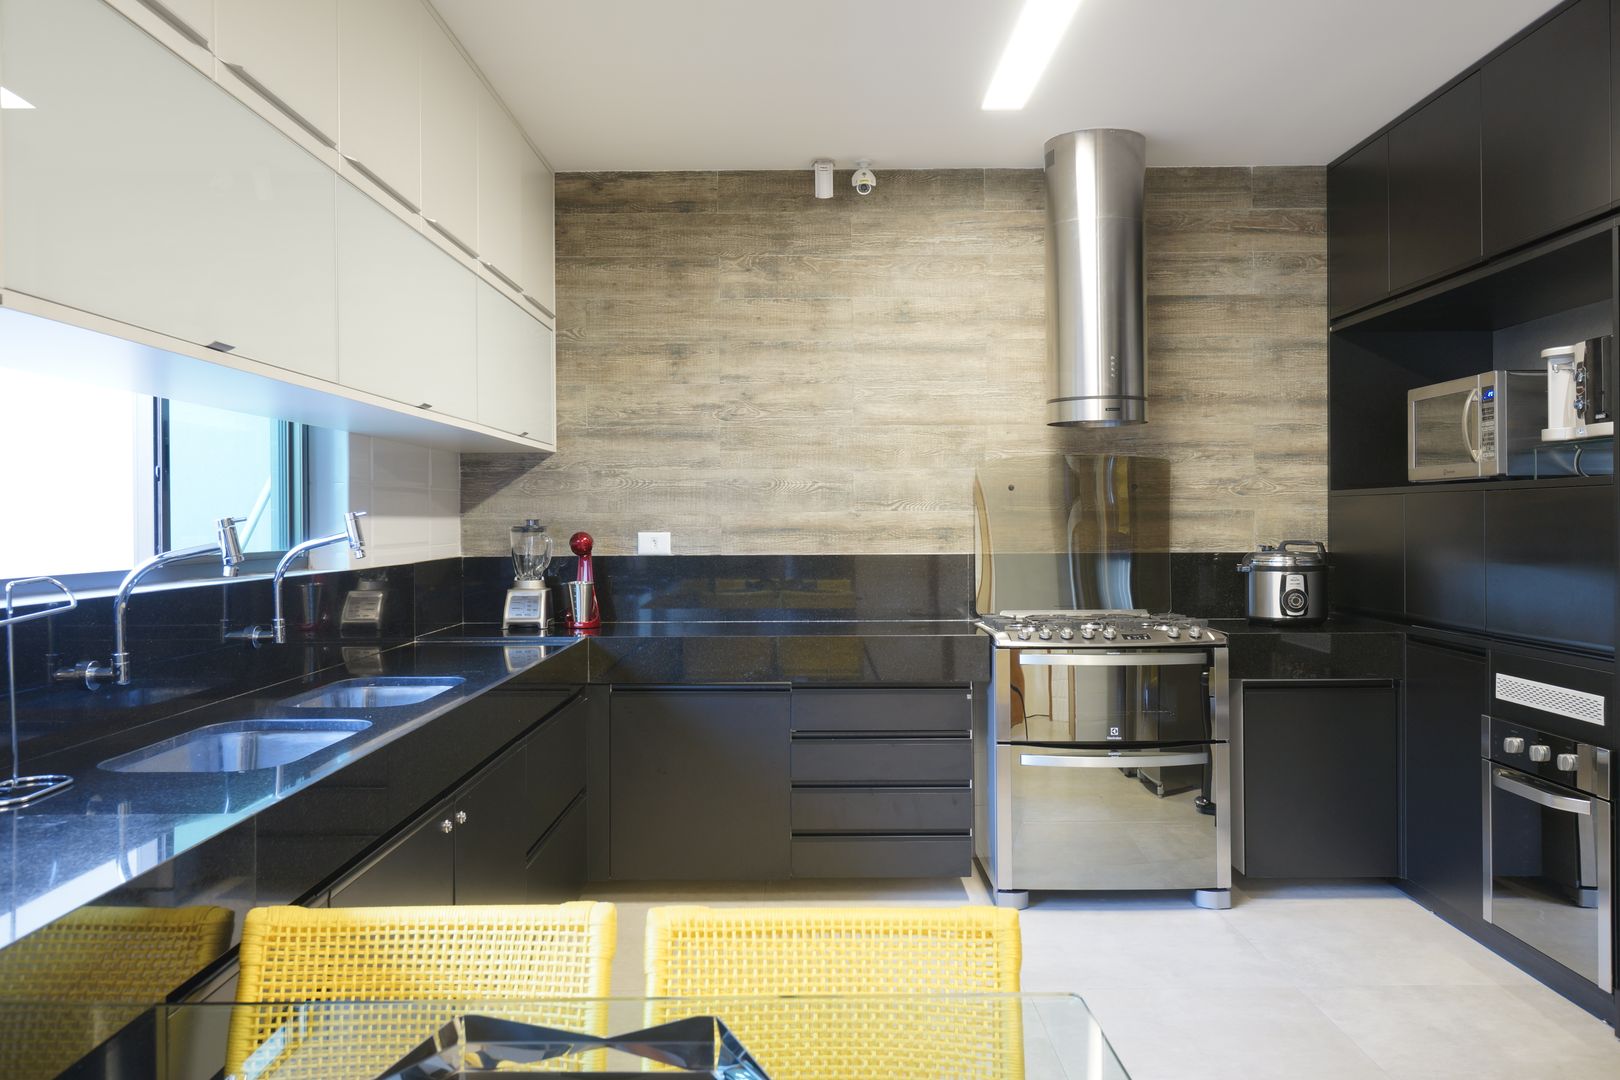 Casa K+R, Julice Pontual Arquitetura Julice Pontual Arquitetura Modern kitchen